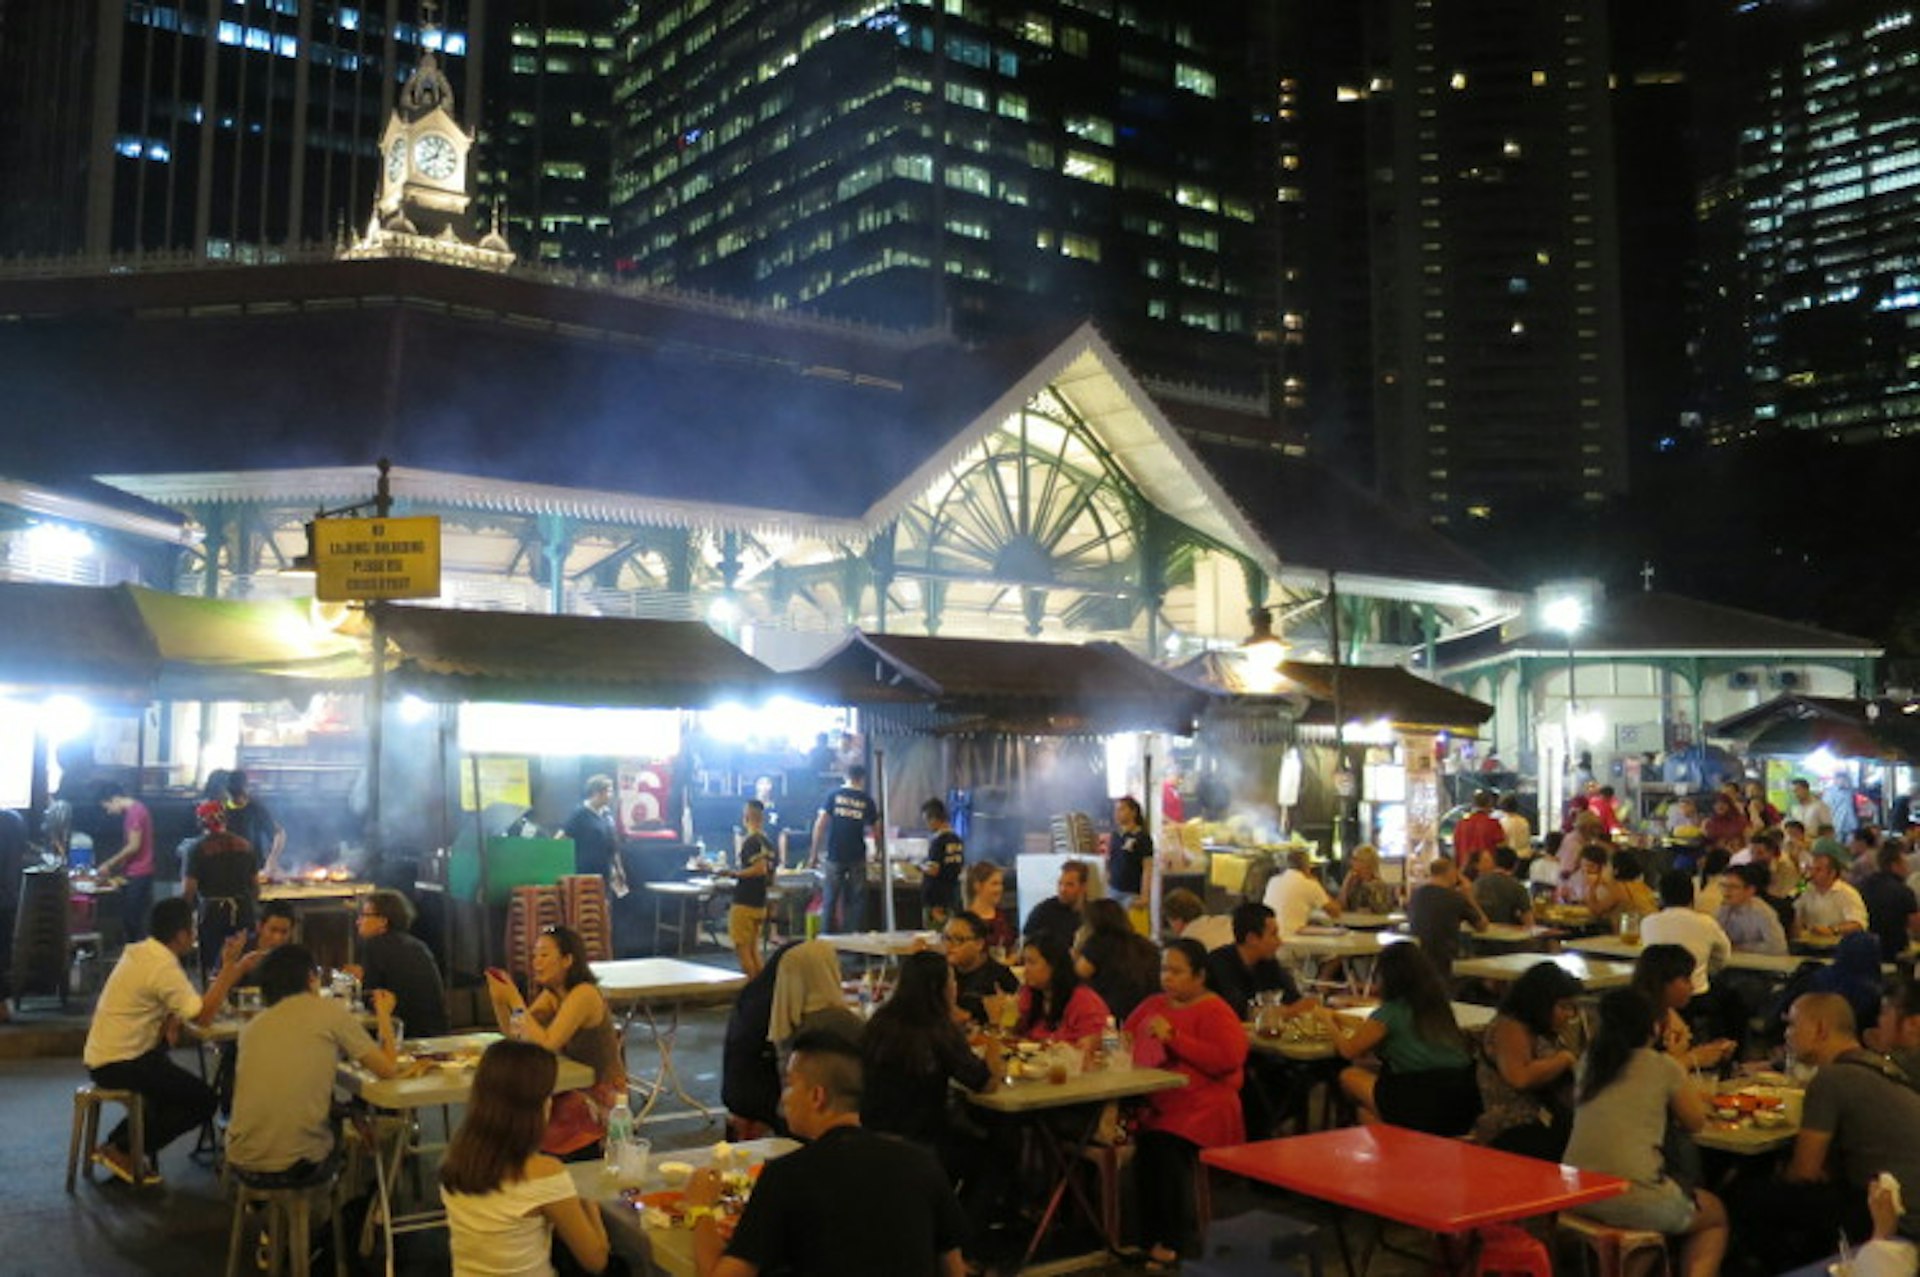 Satay stalls outside Lau Pa Sat, Singapore. Image by Sarah Reid